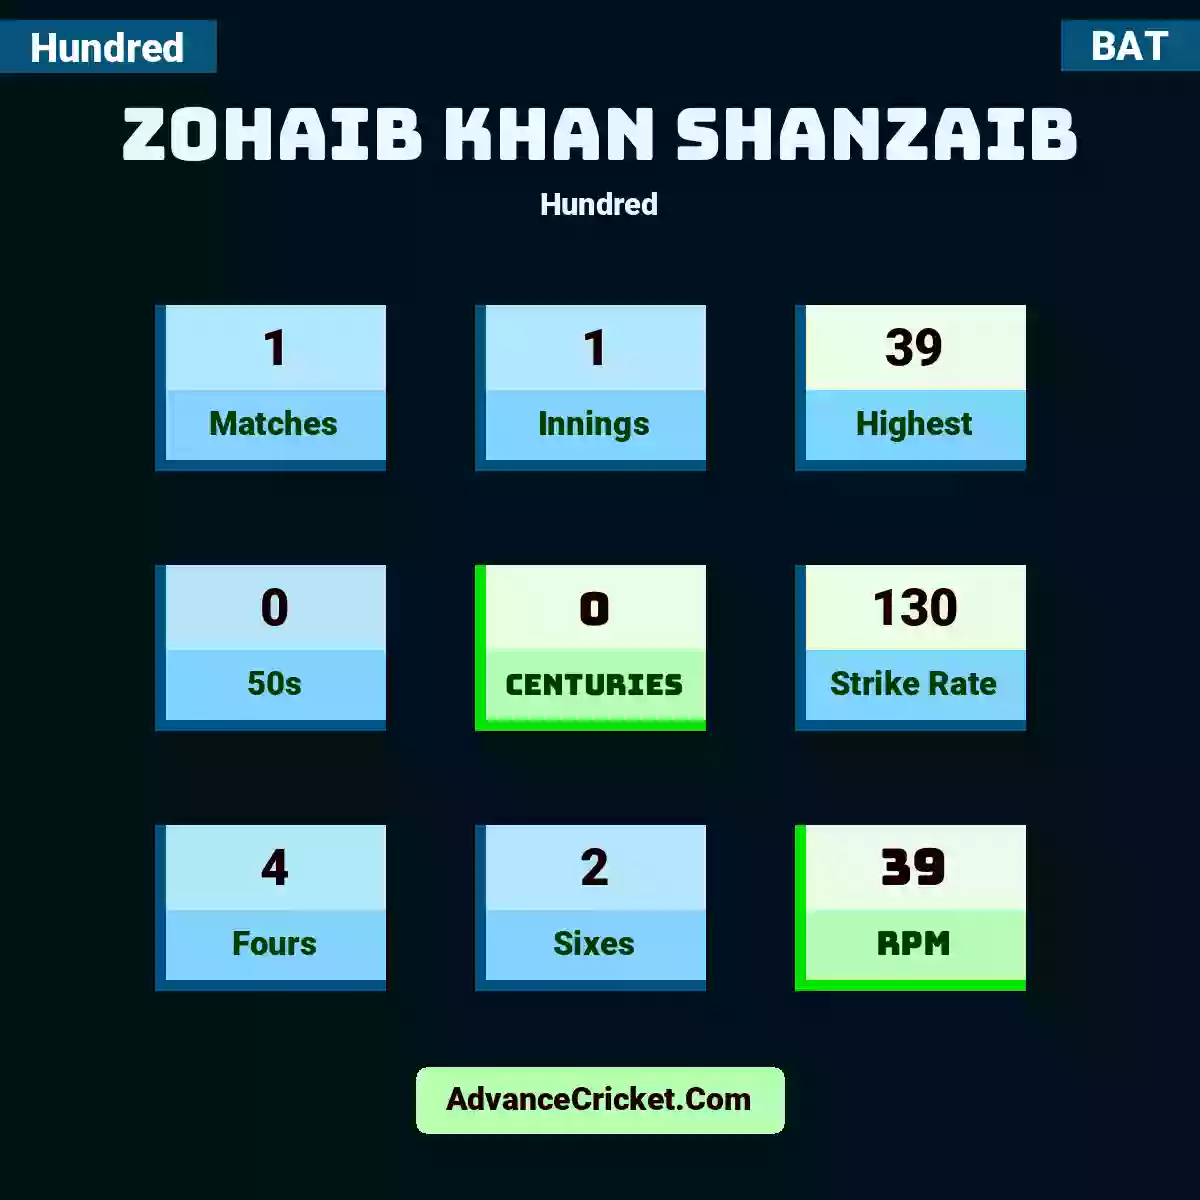 Zohaib Khan Shanzaib Hundred , Zohaib Khan Shanzaib played 1 matches, scored 39 runs as highest, 0 half-centuries, and 0 centuries, with a strike rate of 130. Z.Khan.Shanzaib hit 4 fours and 2 sixes, with an RPM of 39.